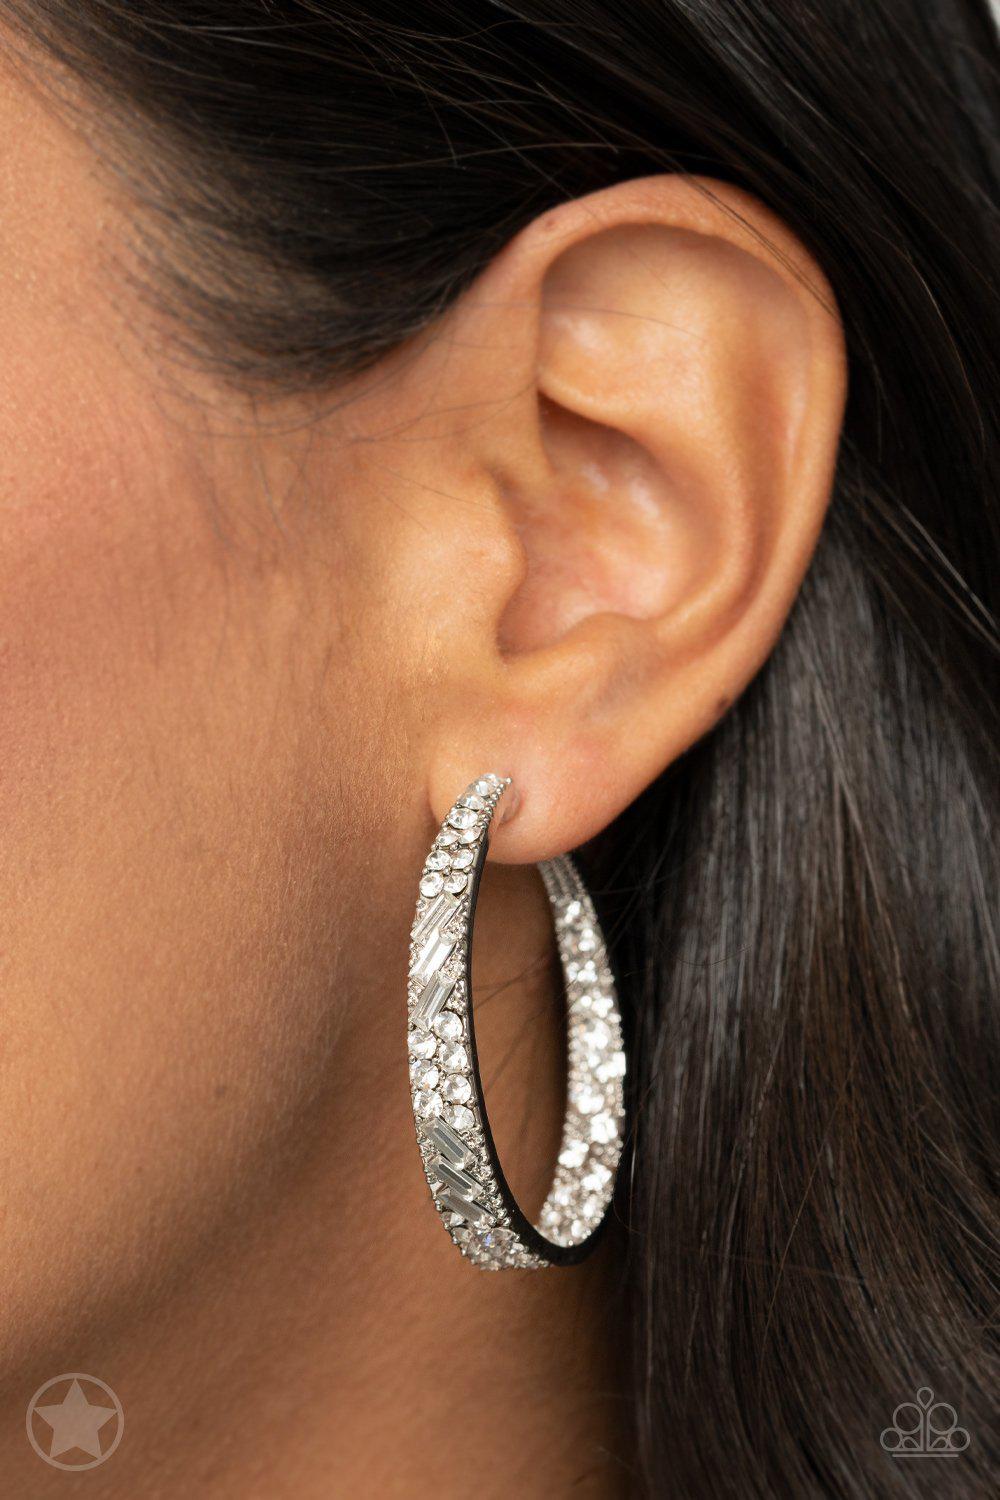 Glitzy by Association White Rhinestone Hoop Earrings - Paparazzi Accessories - model -CarasShop.com - $5 Jewelry by Cara Jewels